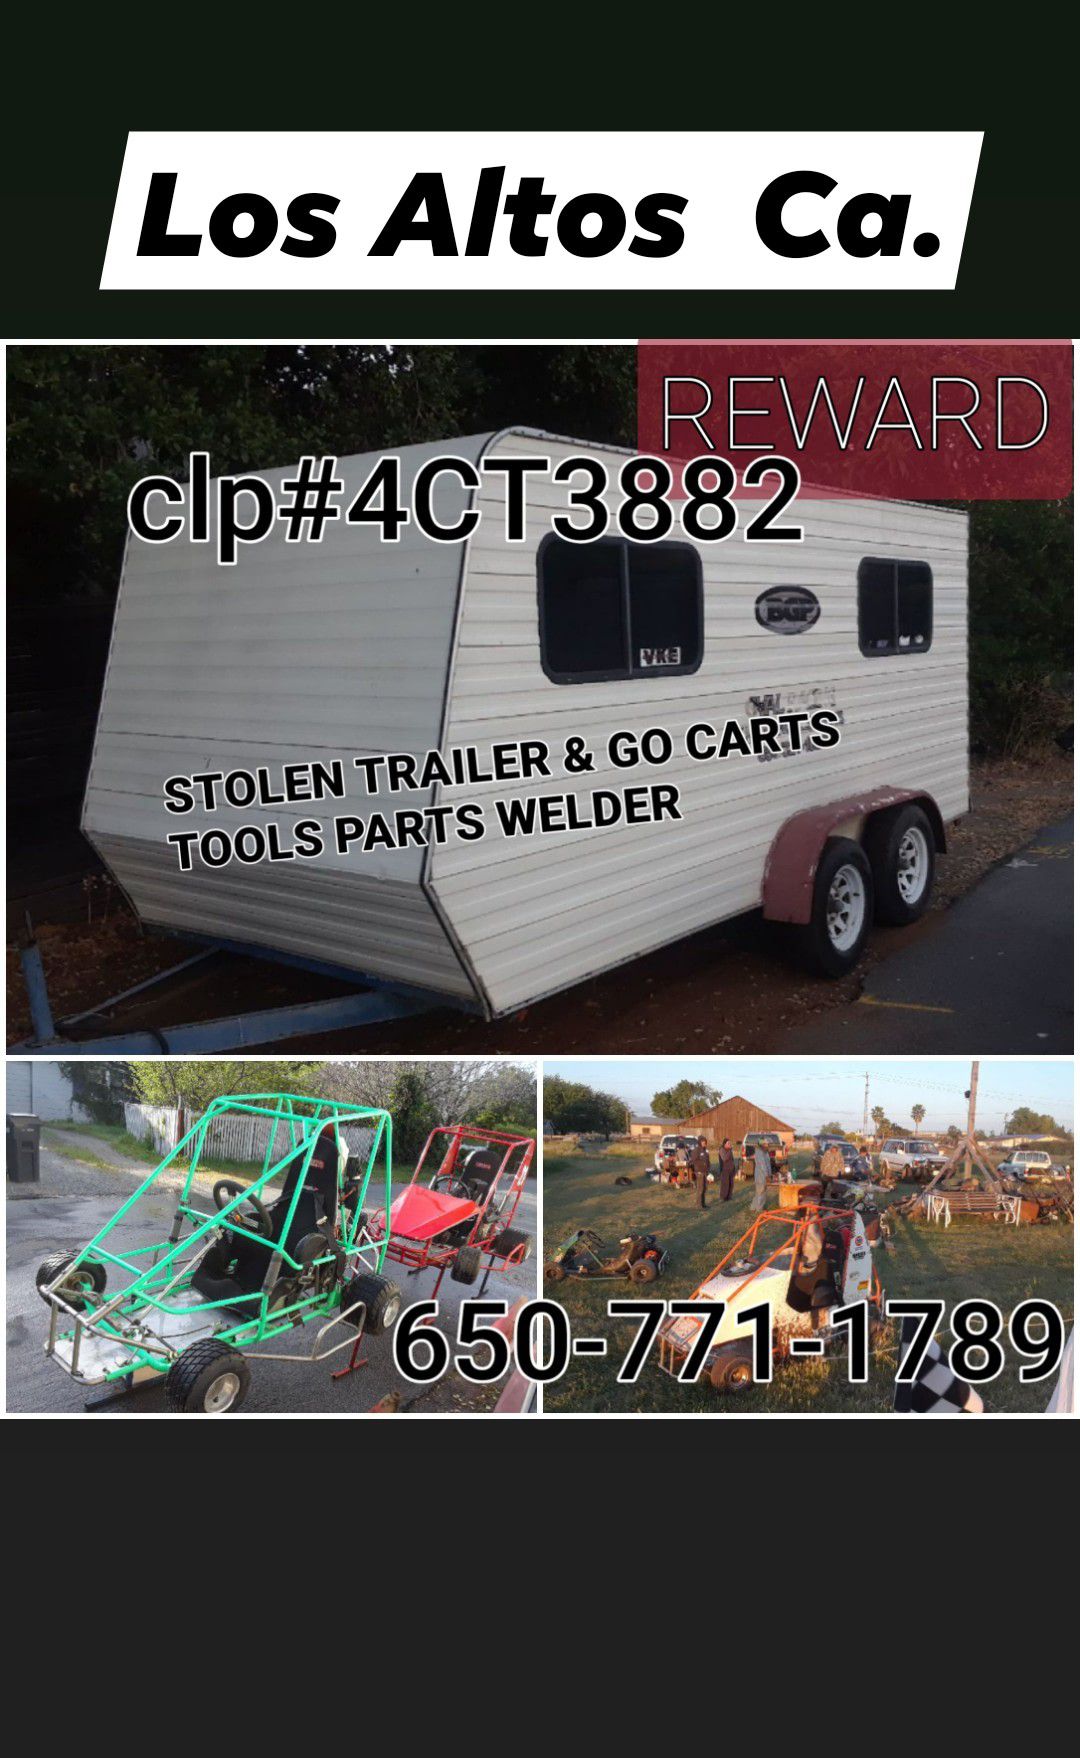 Stolen Go Carts and Trailer